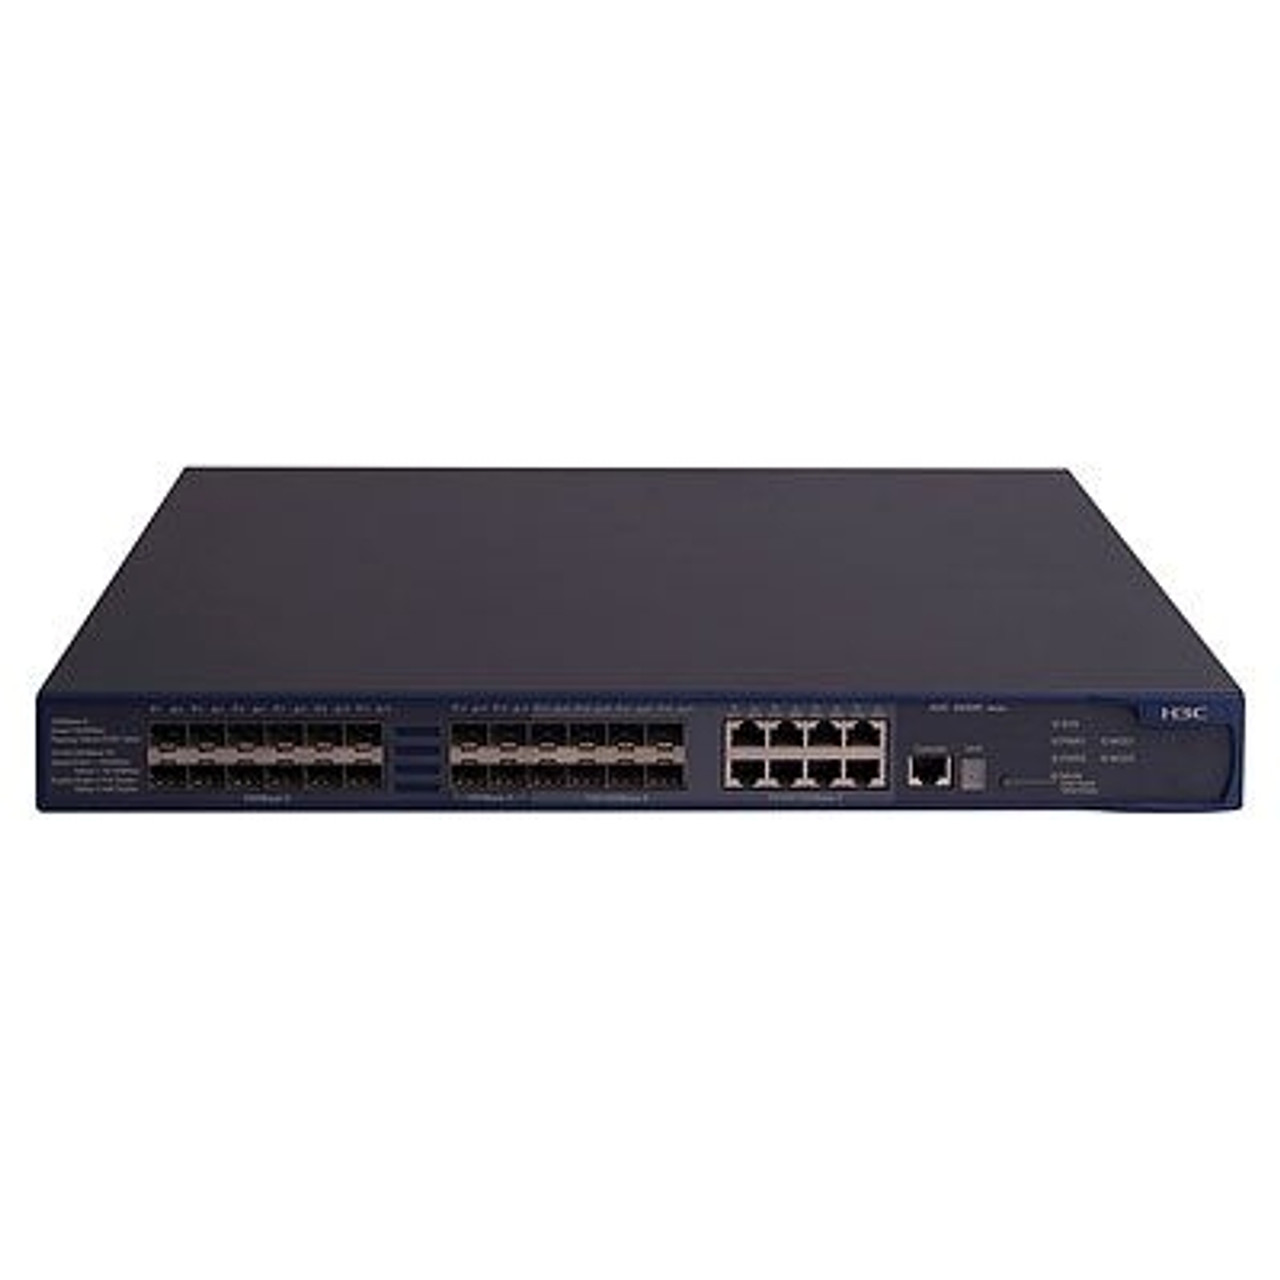 JC674A HP 5820-24XG-SFP+ Layer 3 Switch (Refurbished)